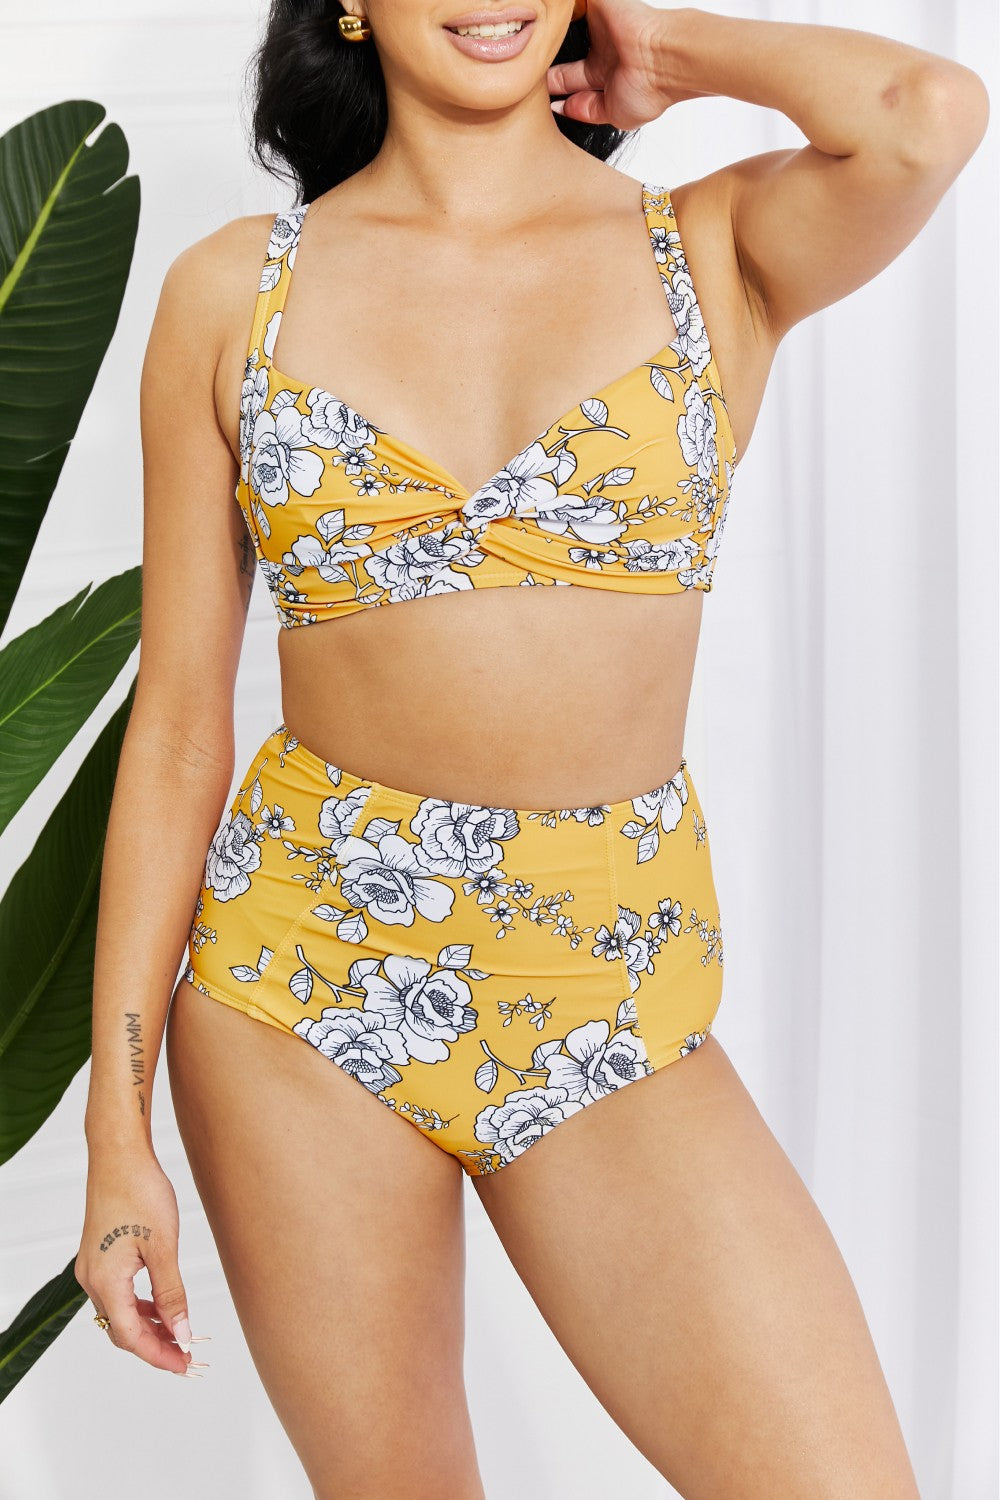 Take A Dip Twist High-Rise Bikini in Mustard - Women’s Clothing & Accessories - Swimwear - 9 - 2024